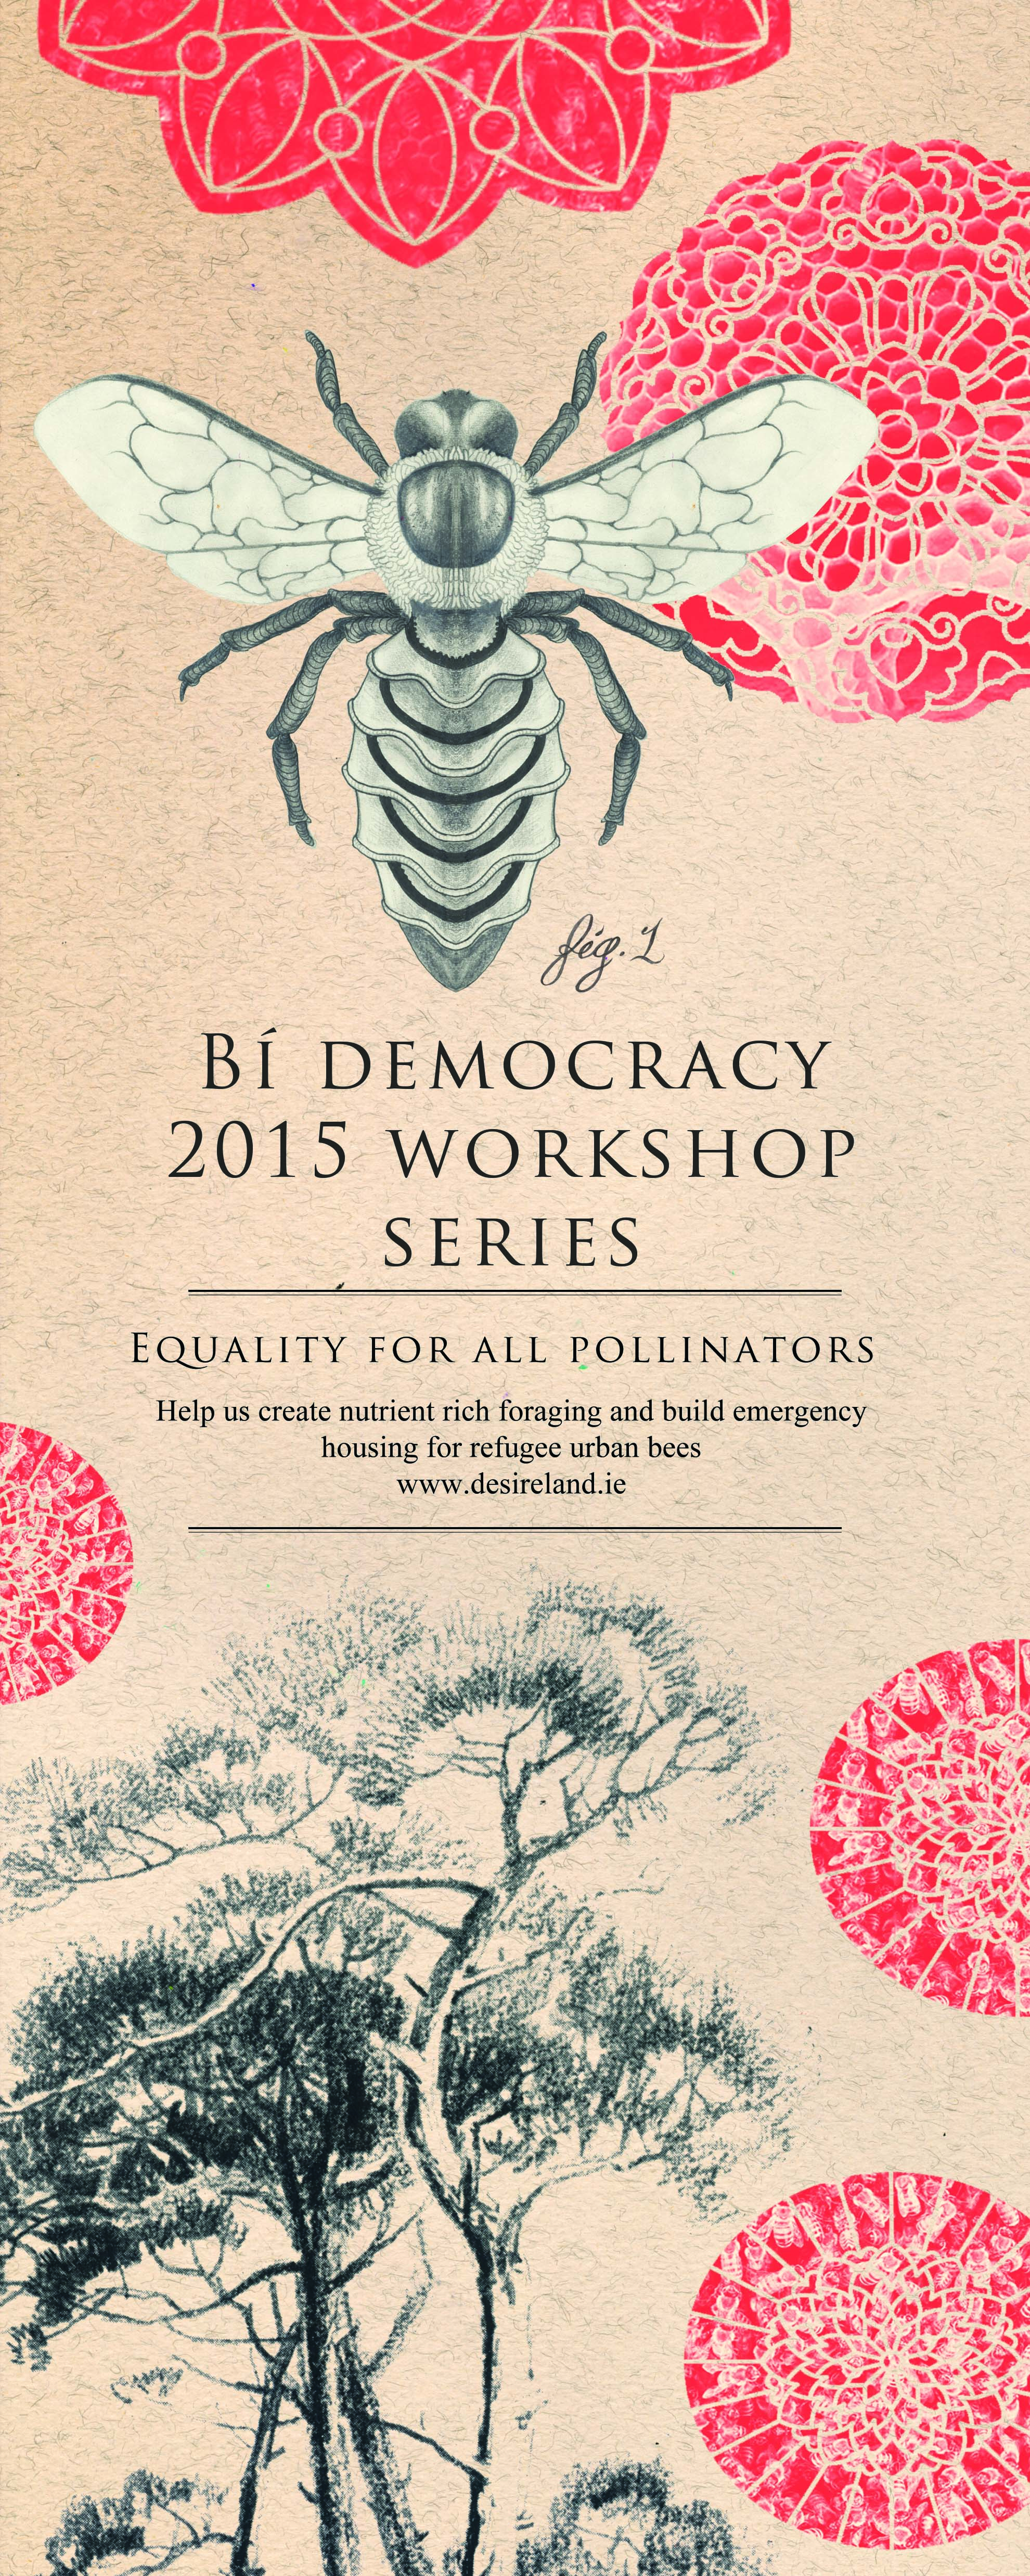 Bí-democracy-workshops